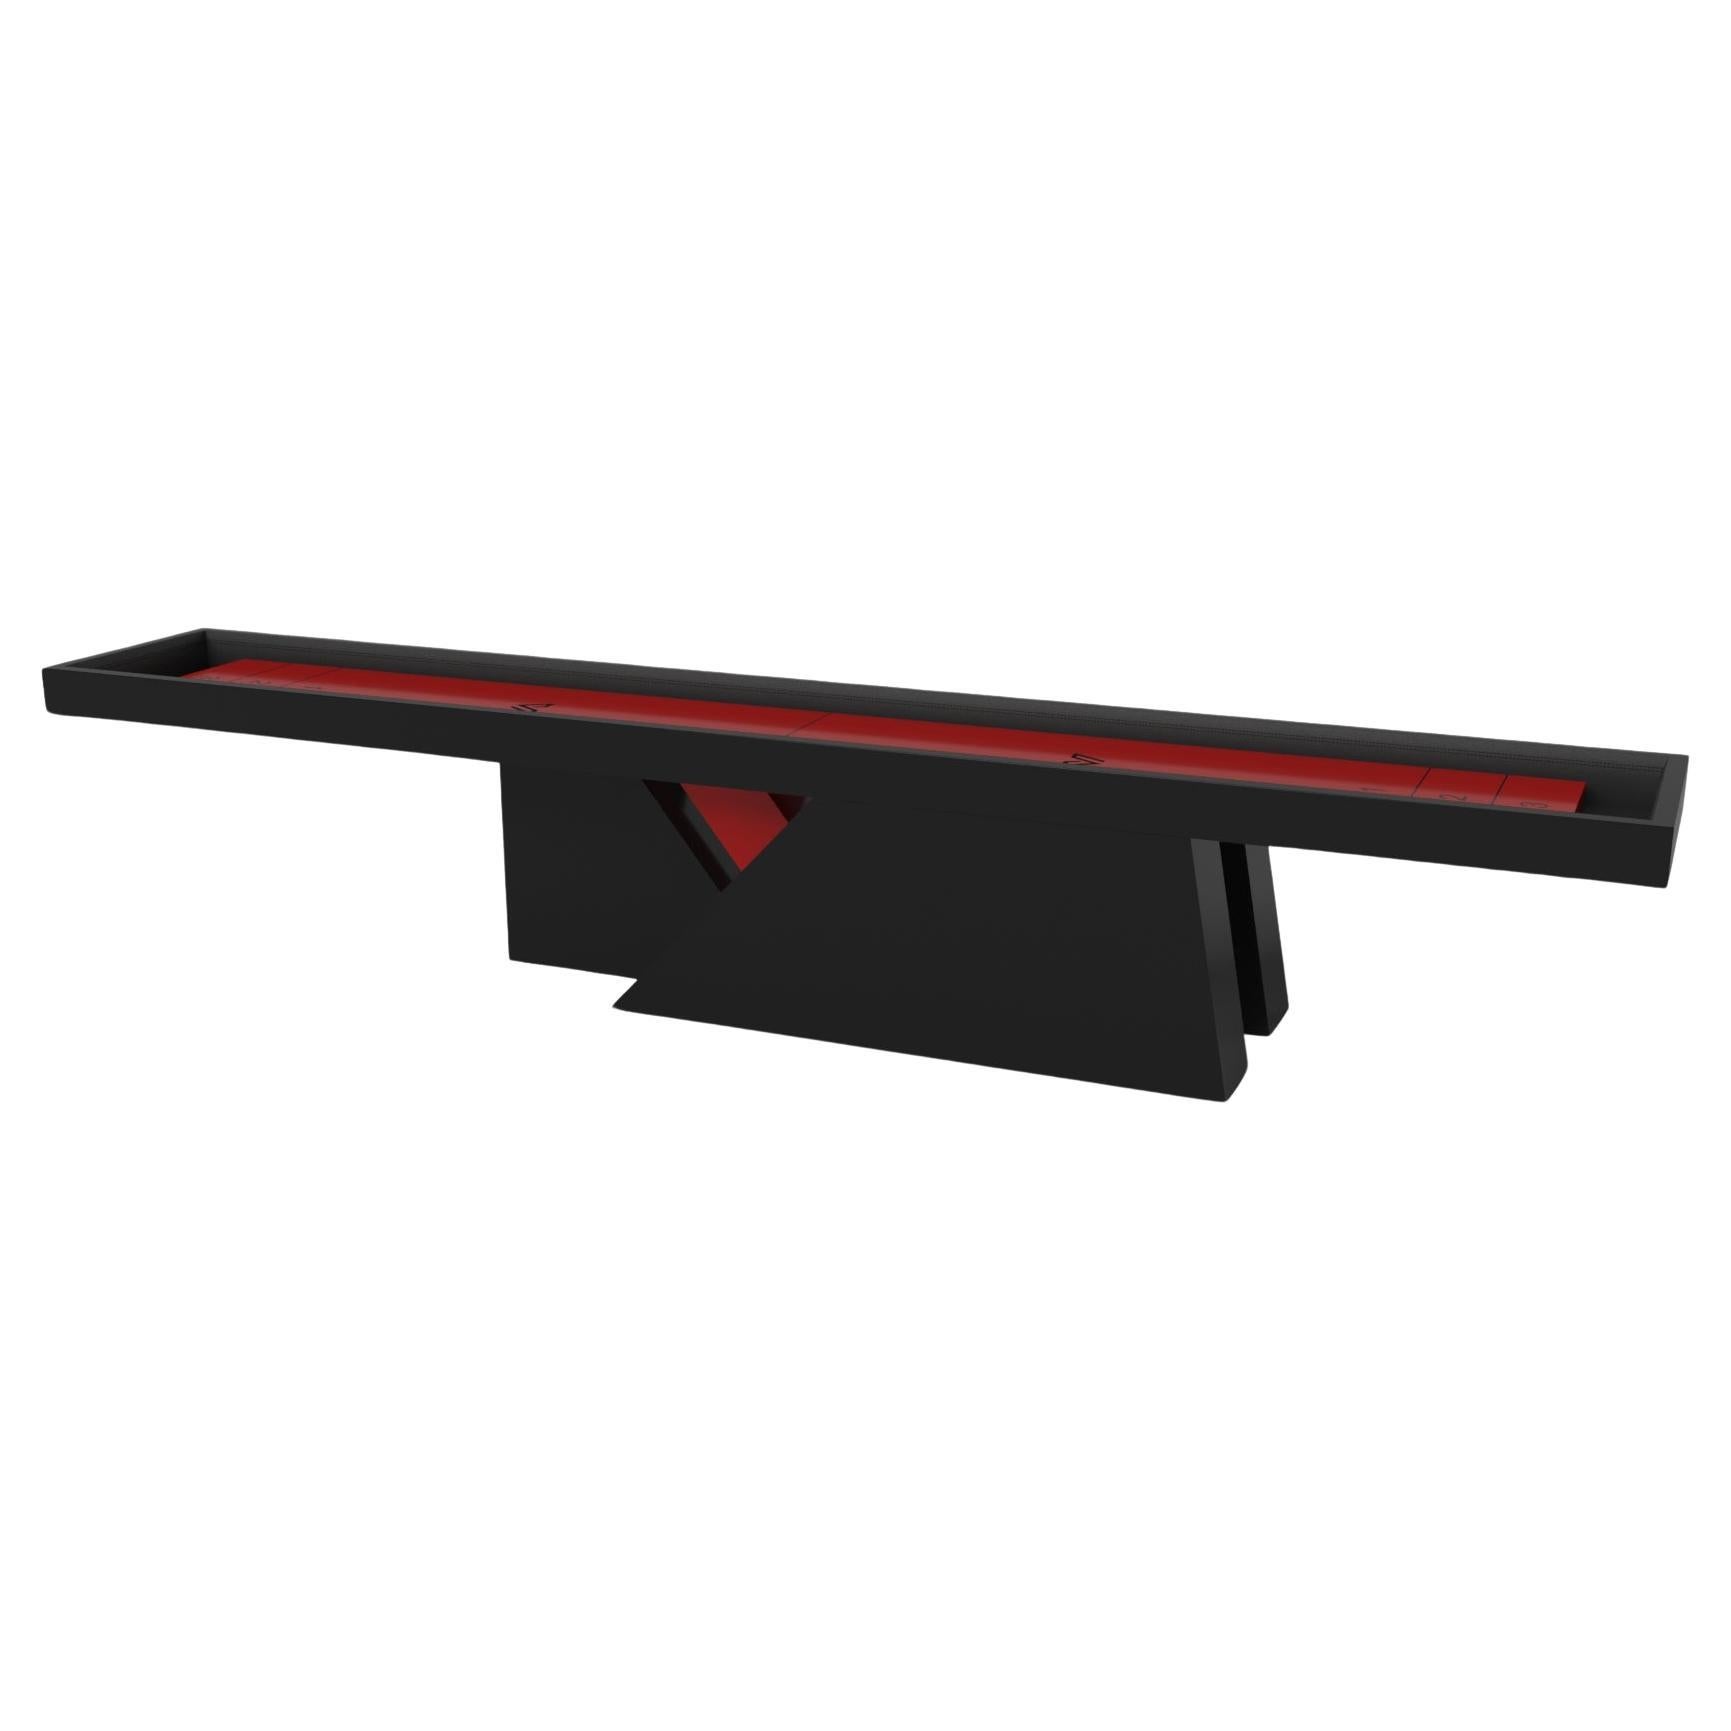 Elevate Customs Stilt Shuffleboard Tables /Solid Pantone Black Color in 16' -USA